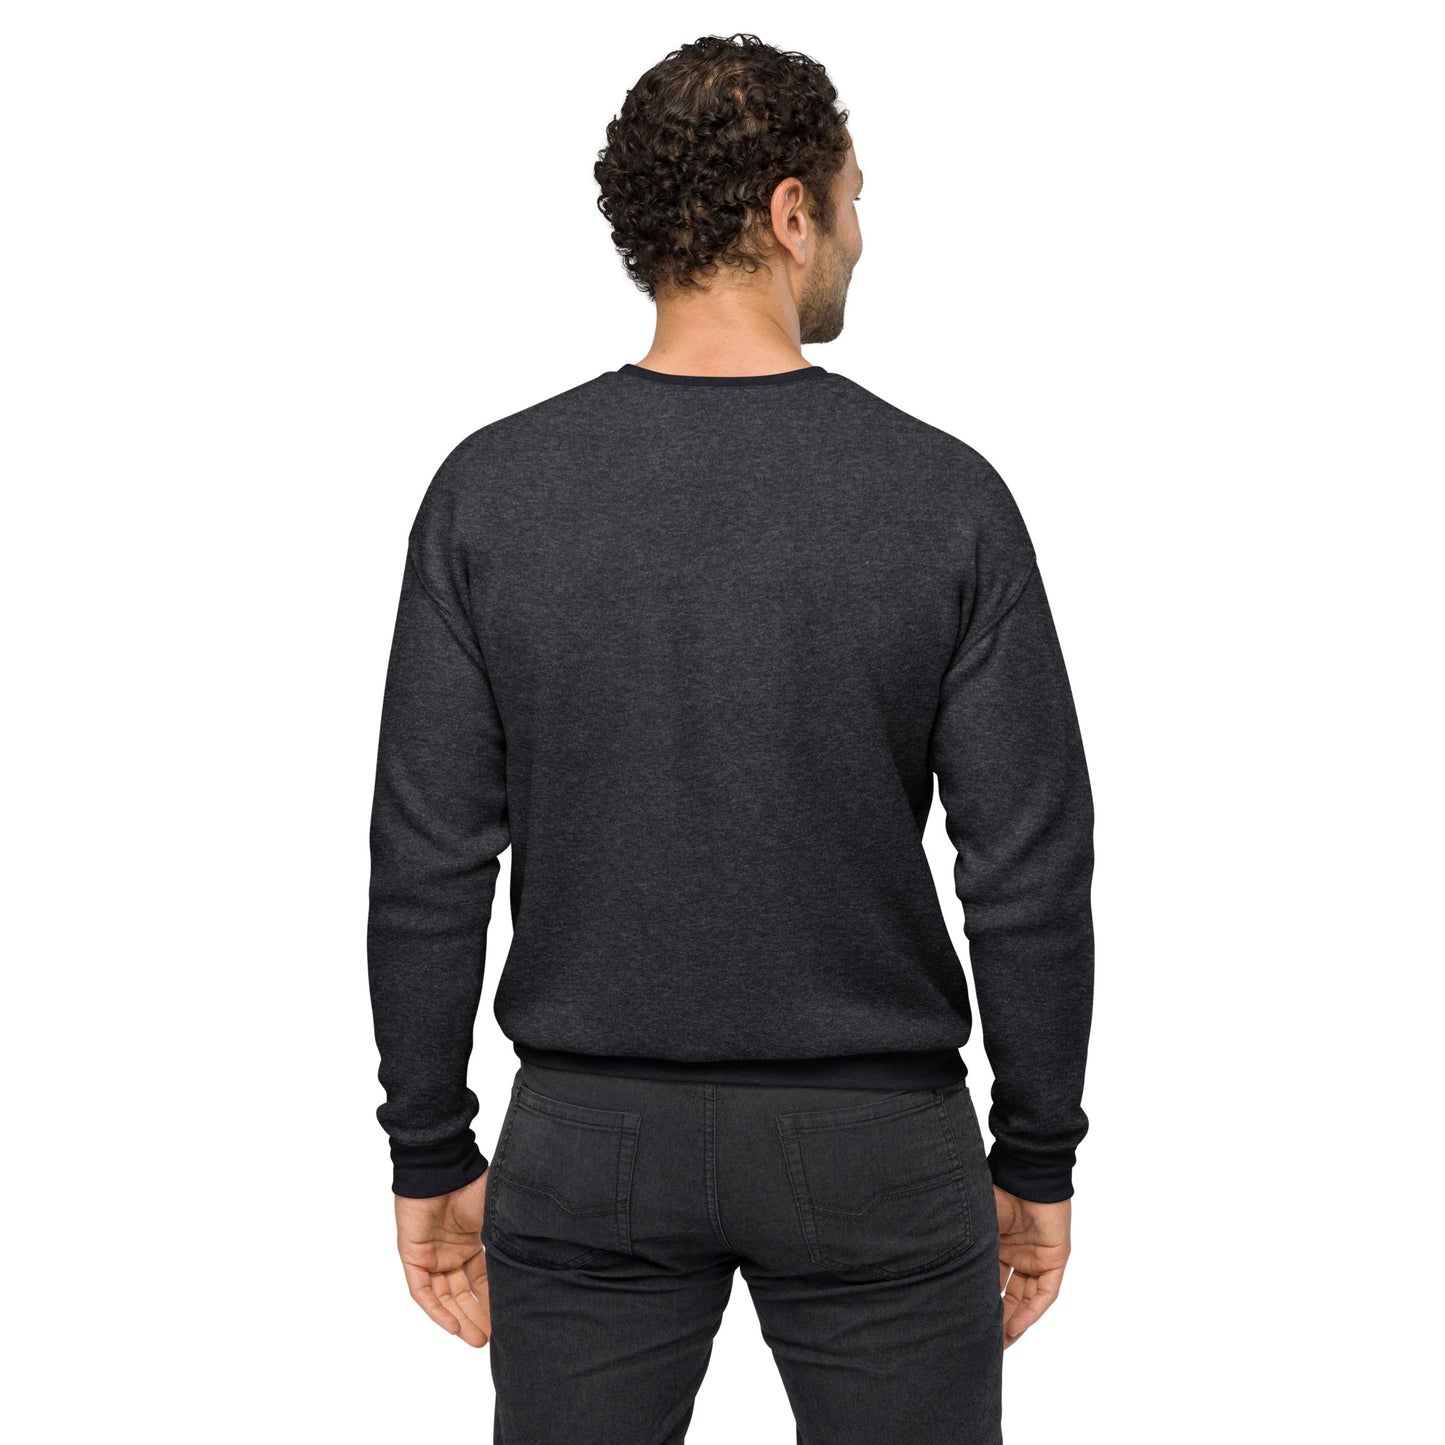 Unisex Sueded Fleece Sweatshirt - Banamerica Collection